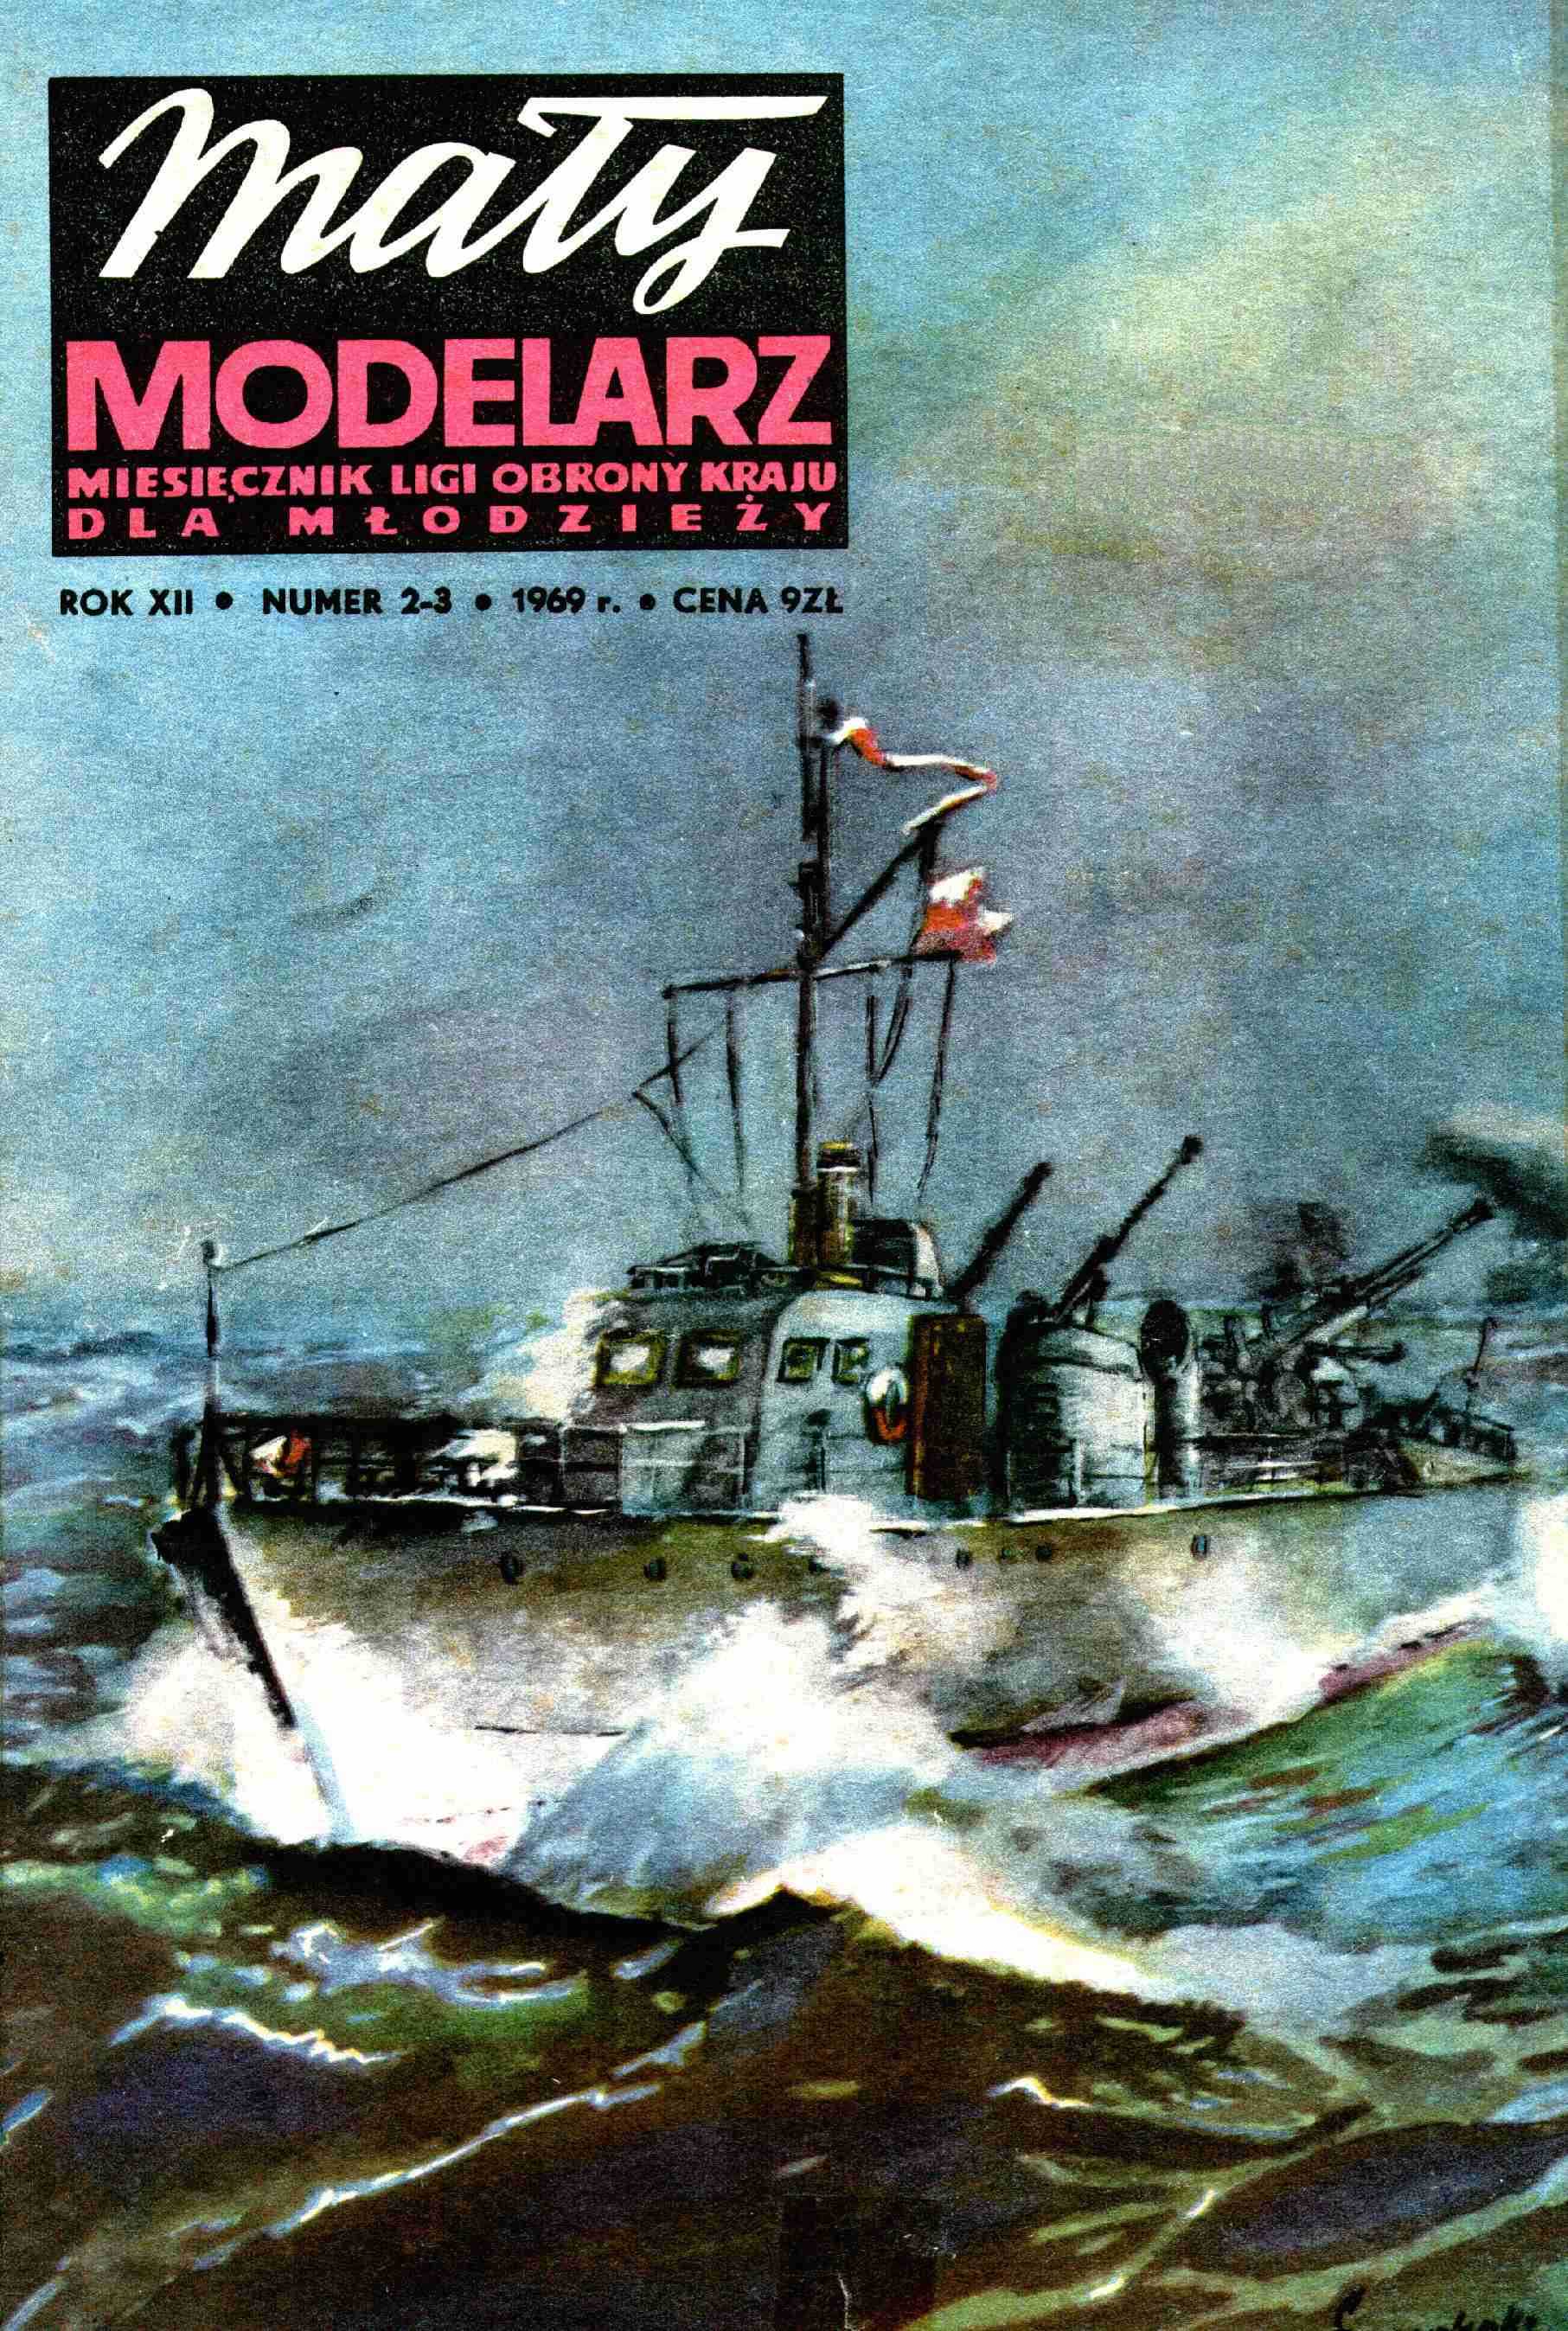 "Maly Modelarz" 2-3, 1969